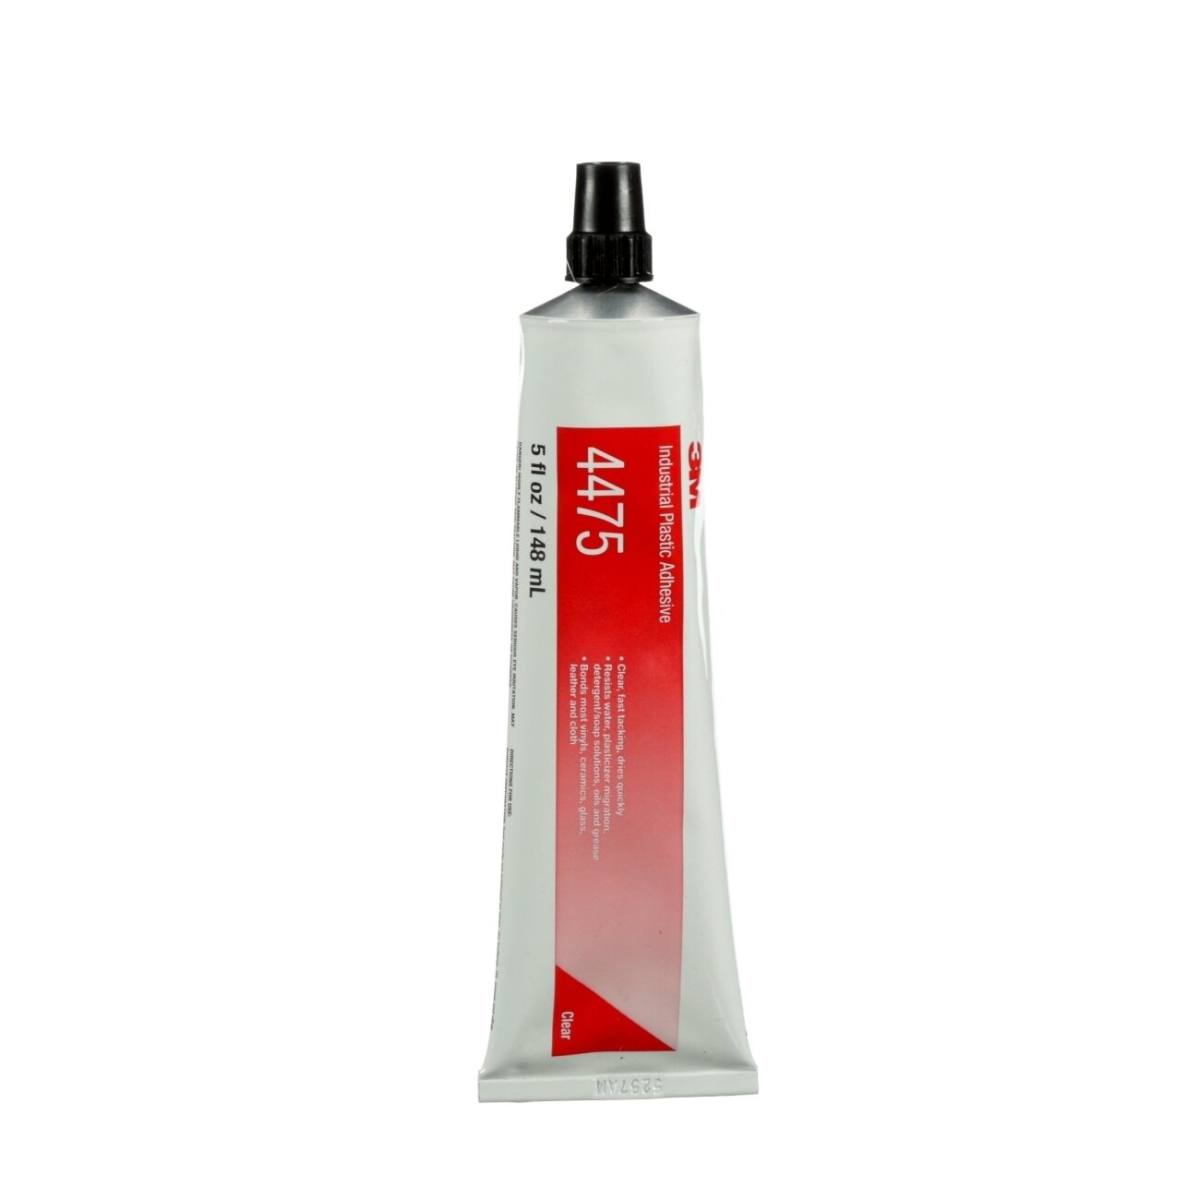 3M Scotch-Weld 4475 es un adhesivo multiusos a base de copolímero con 150 ml de